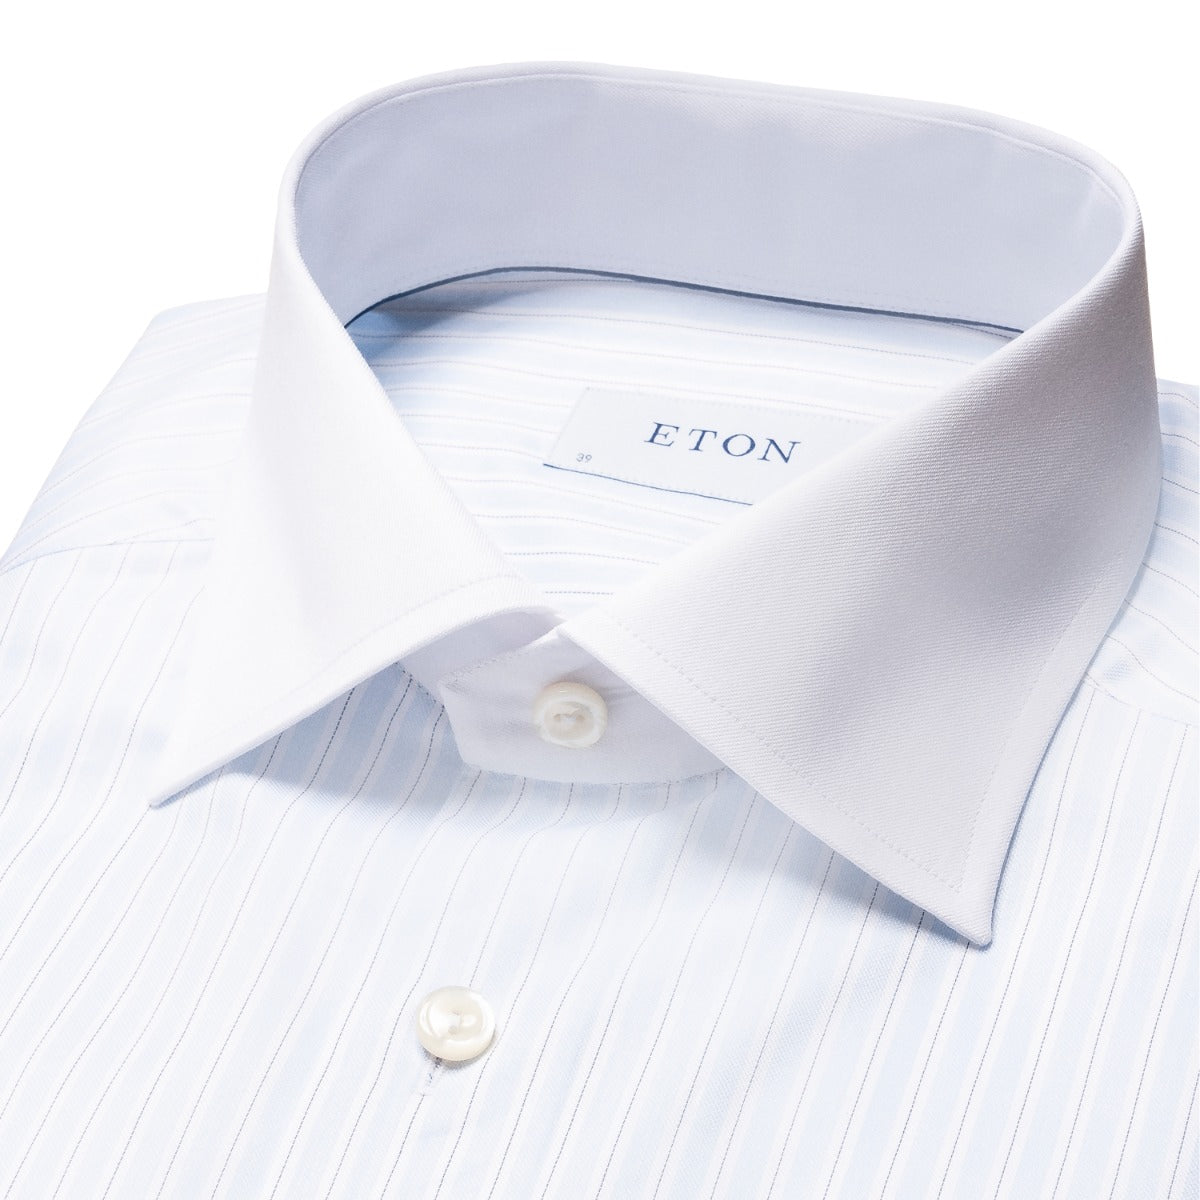 Light Blue Striped Contrast Collar Signature Twill Shirt  Eton   